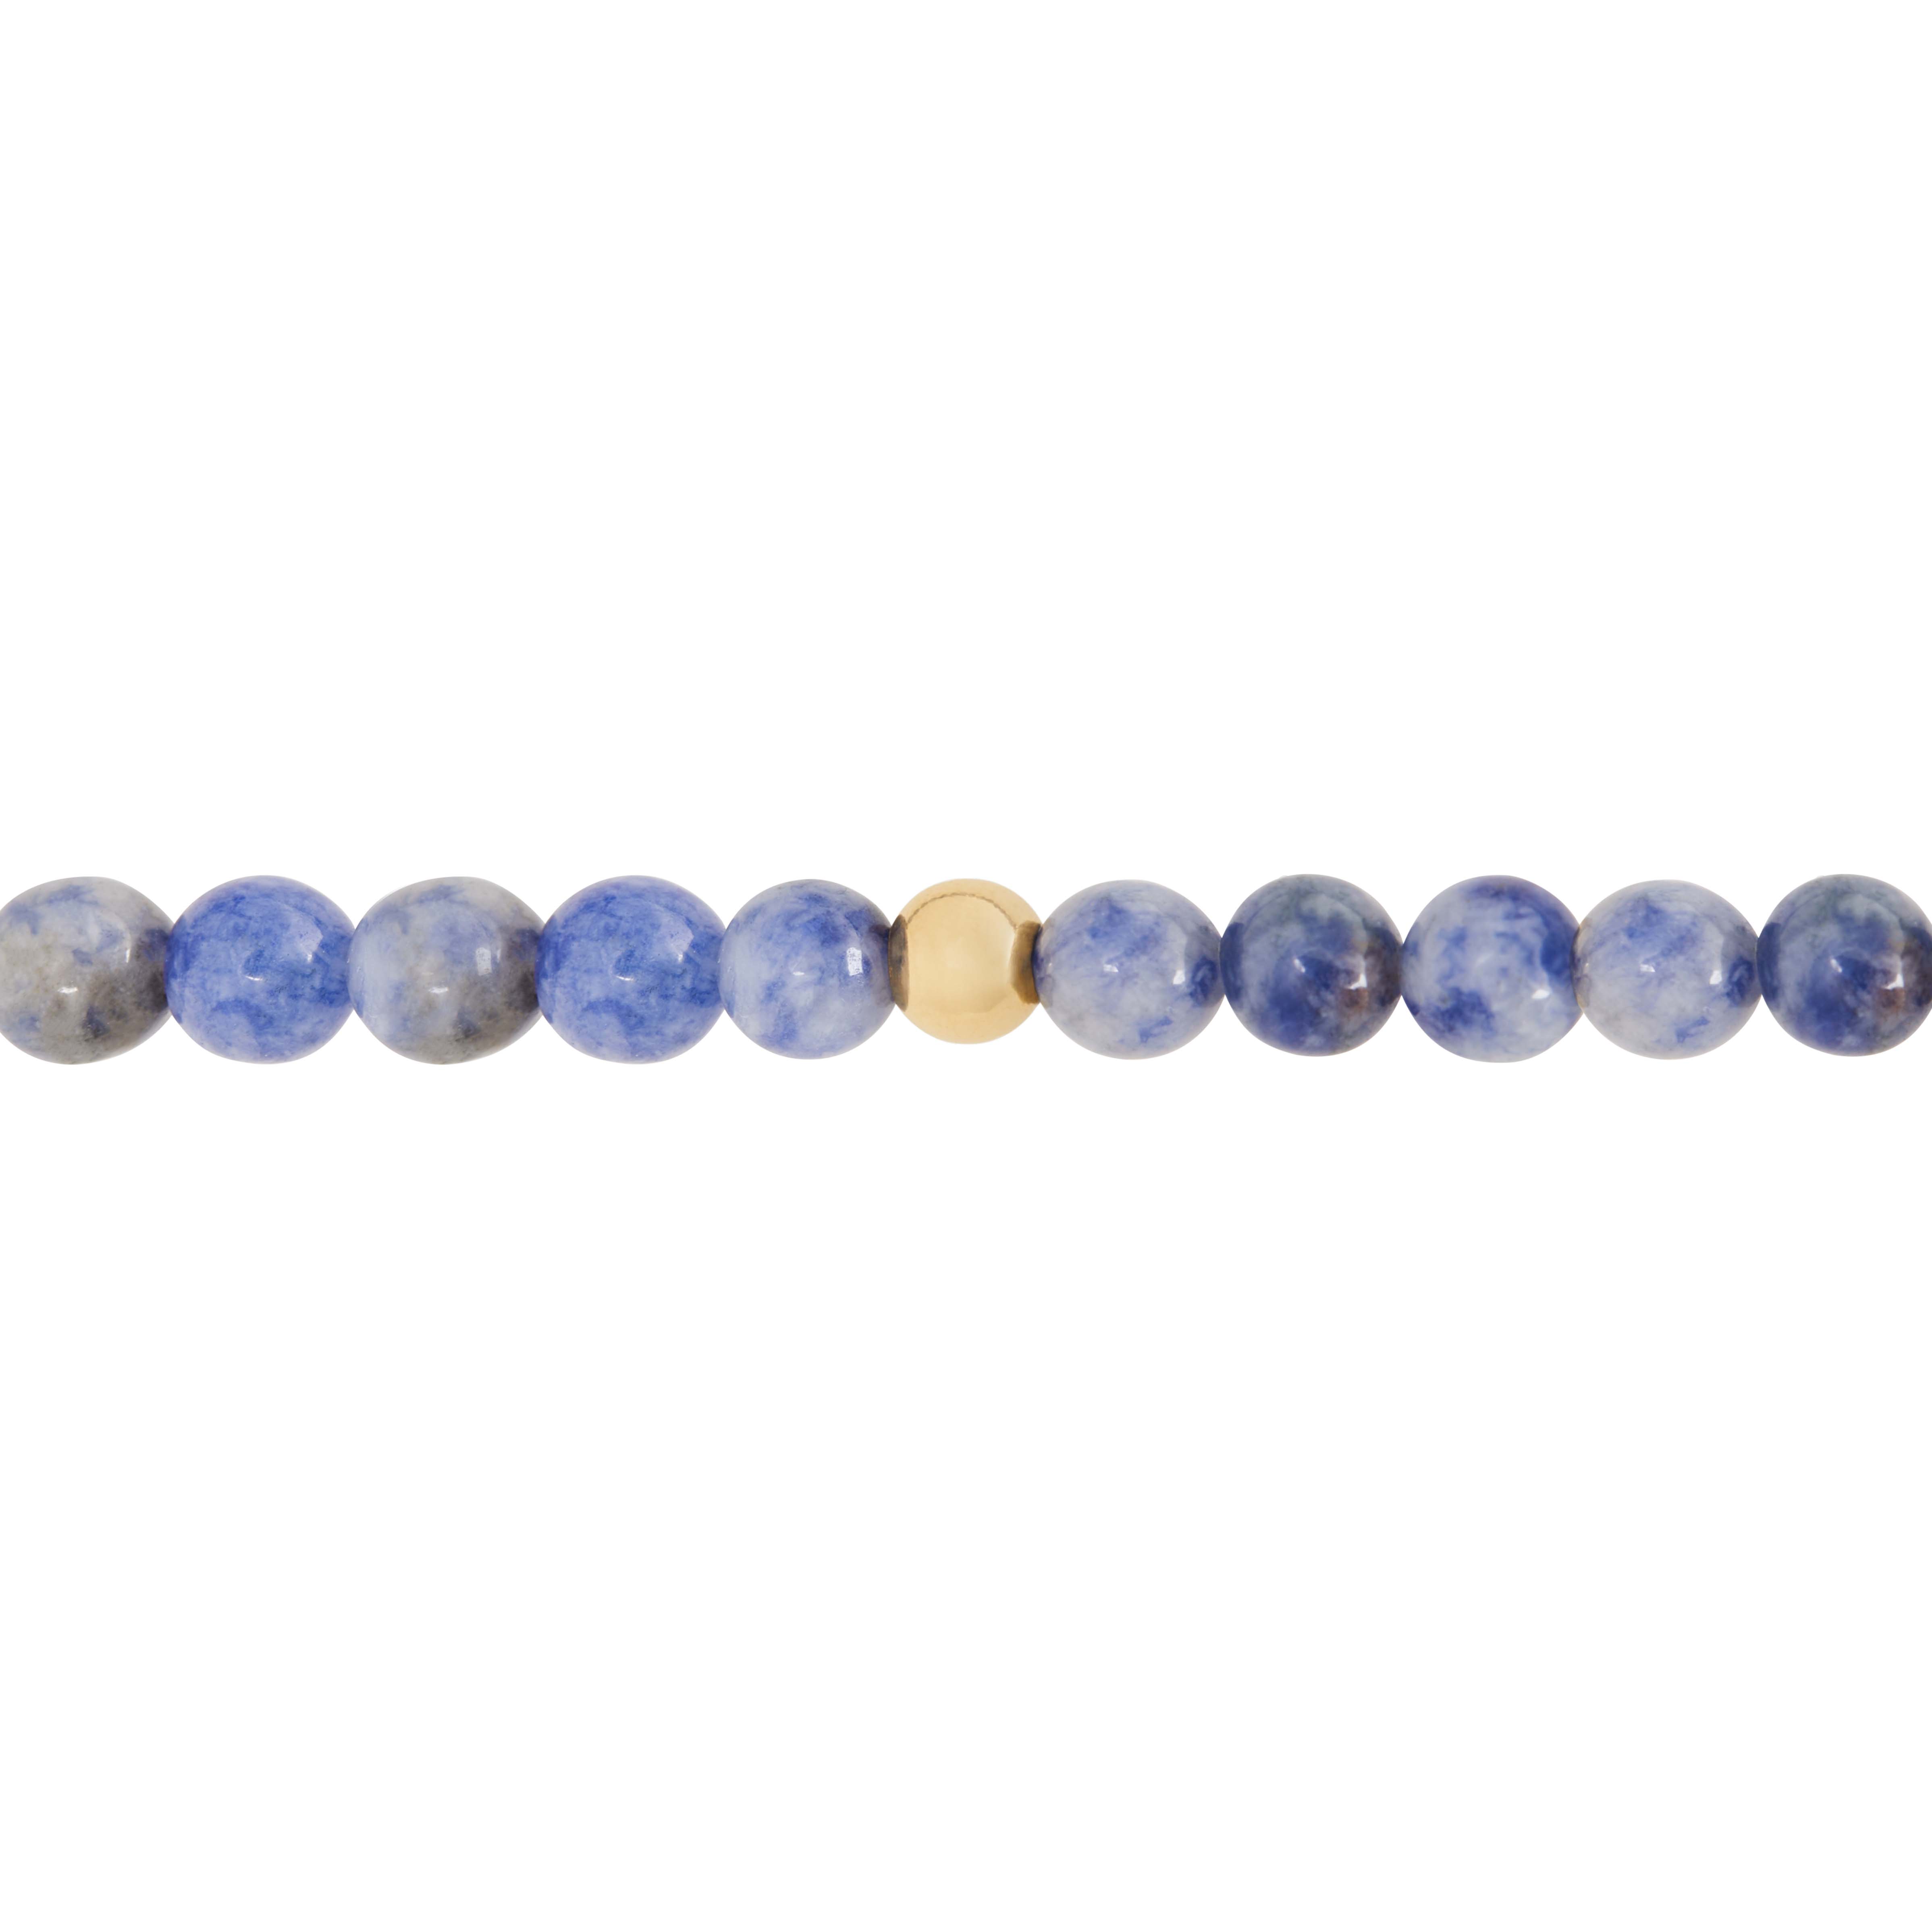 Echtsteinarmband - "Stones of nature" - Blauer Sodalith - vergoldet